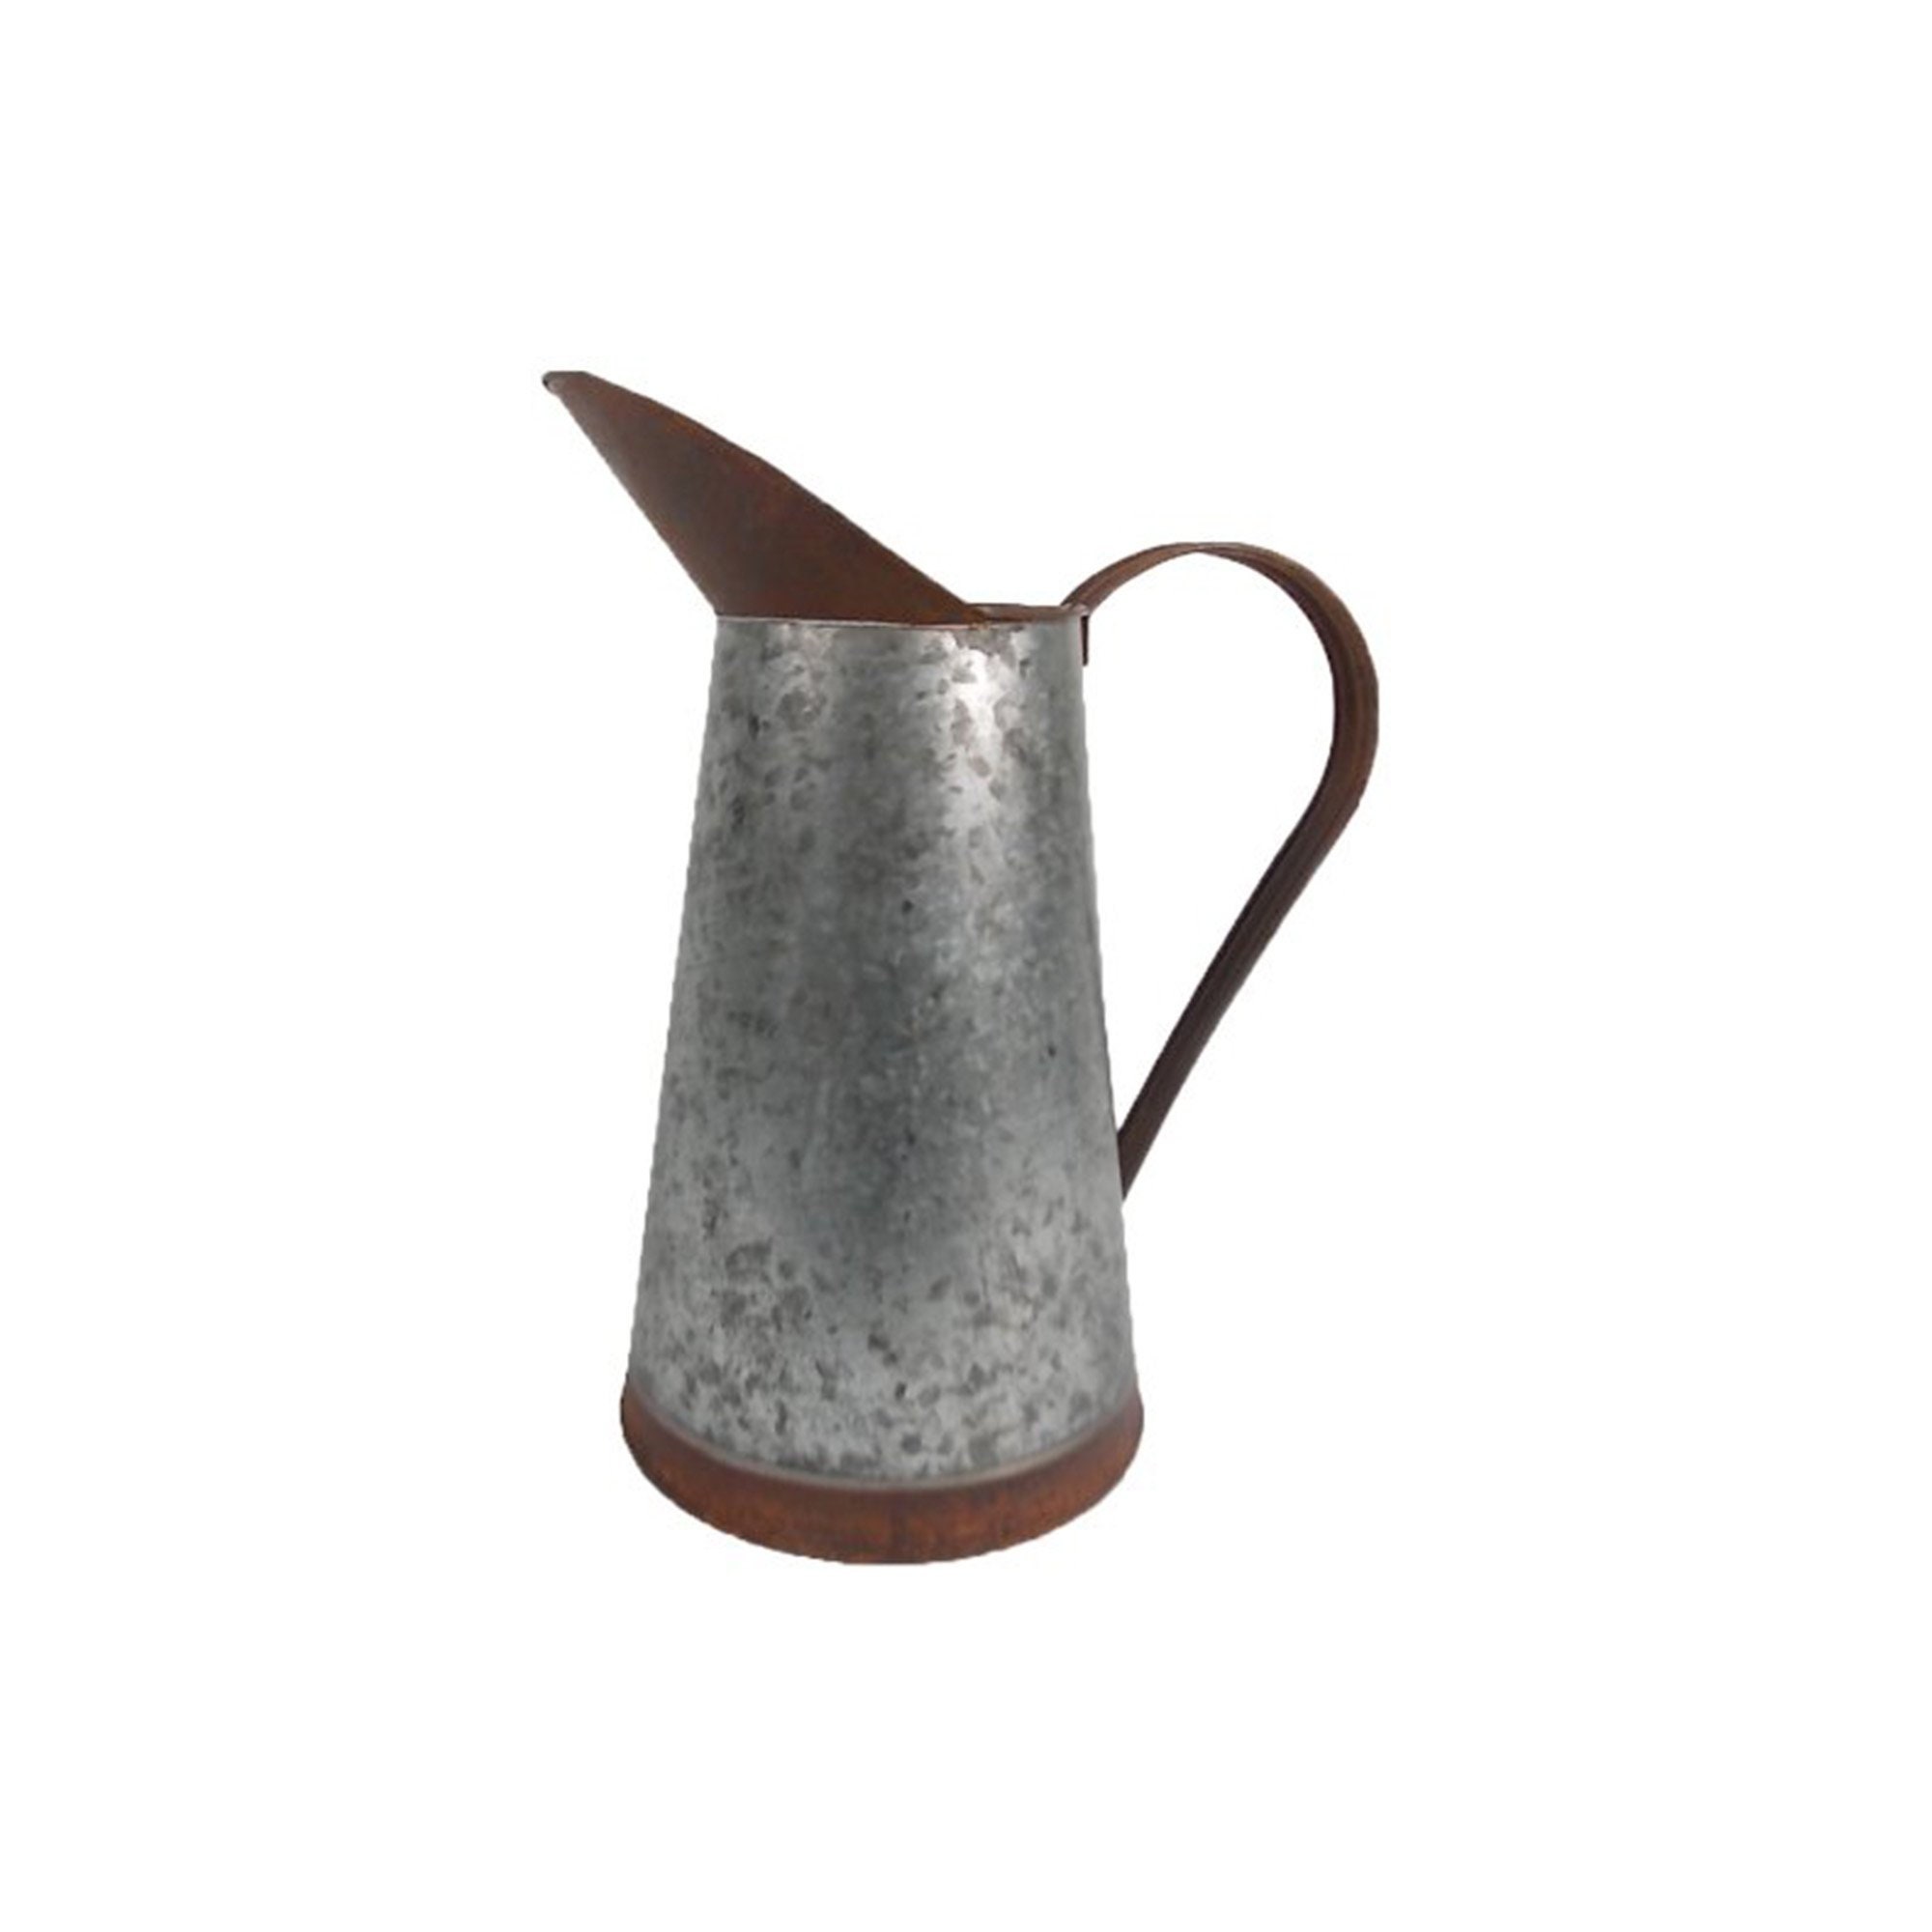 Copper and Galvanized Metal Rustic Farmhouse Pitcher Vase